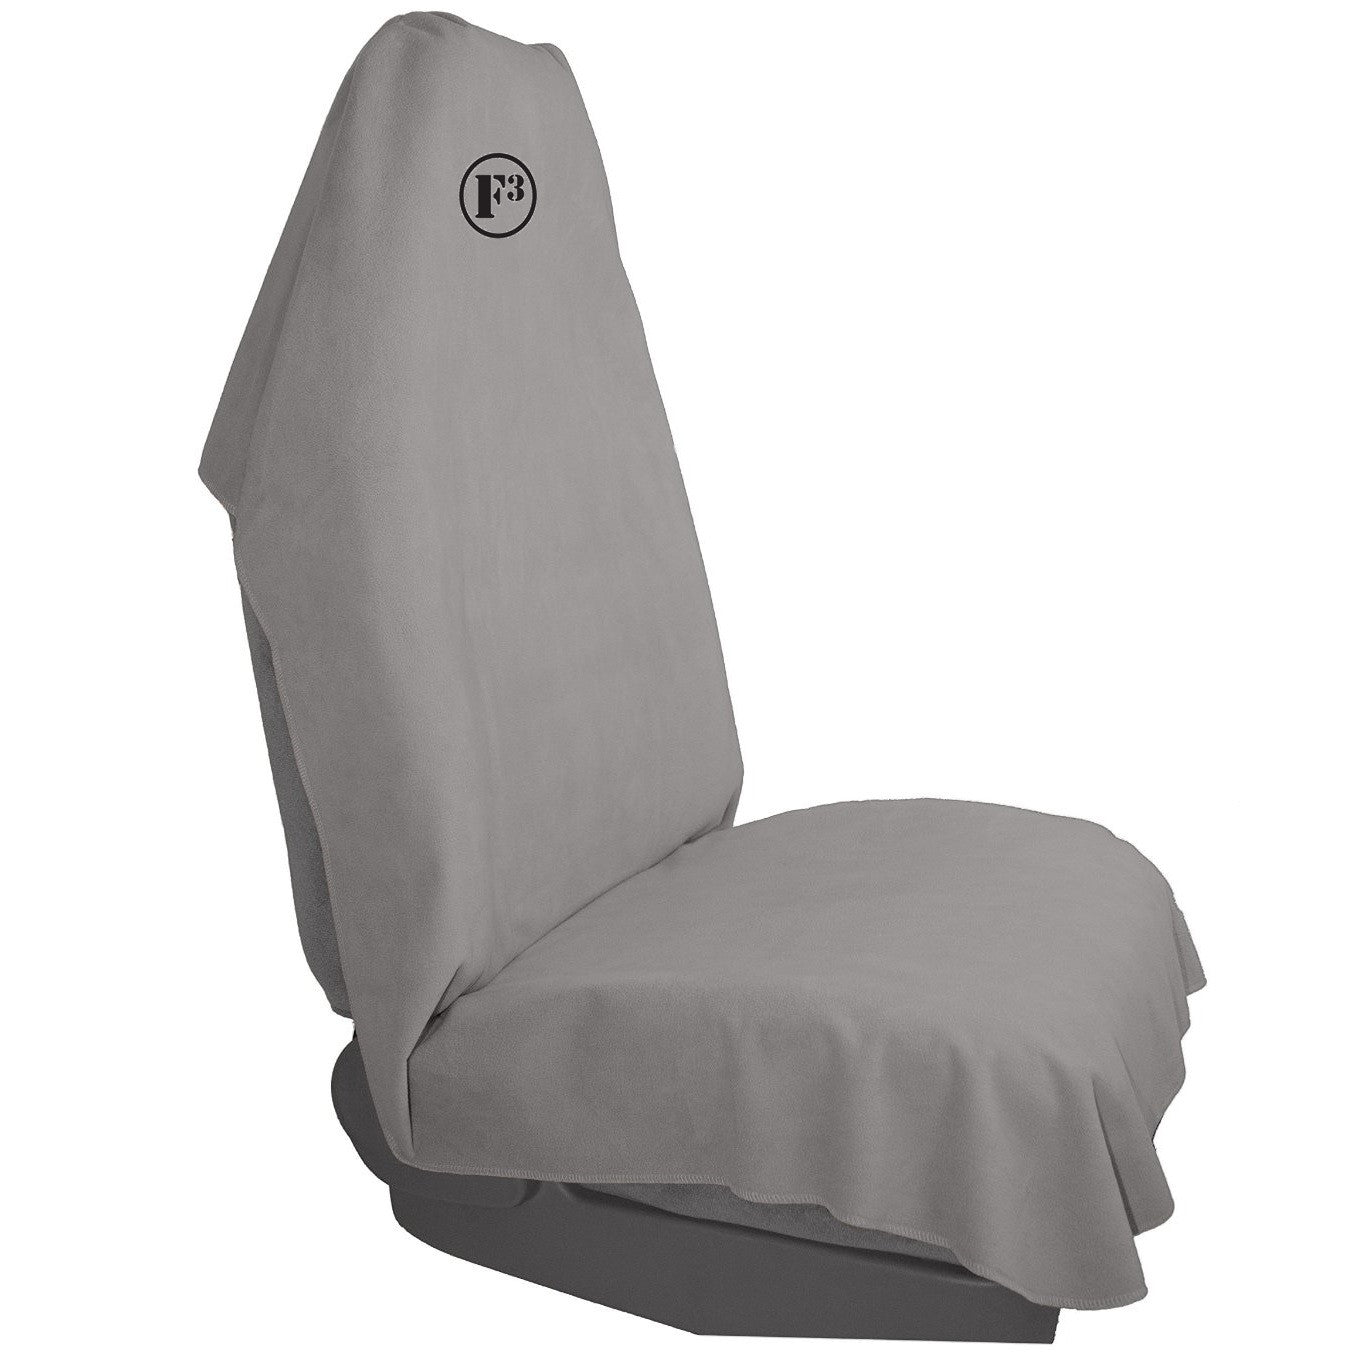 F3 UltraSport Seatshield - Gray